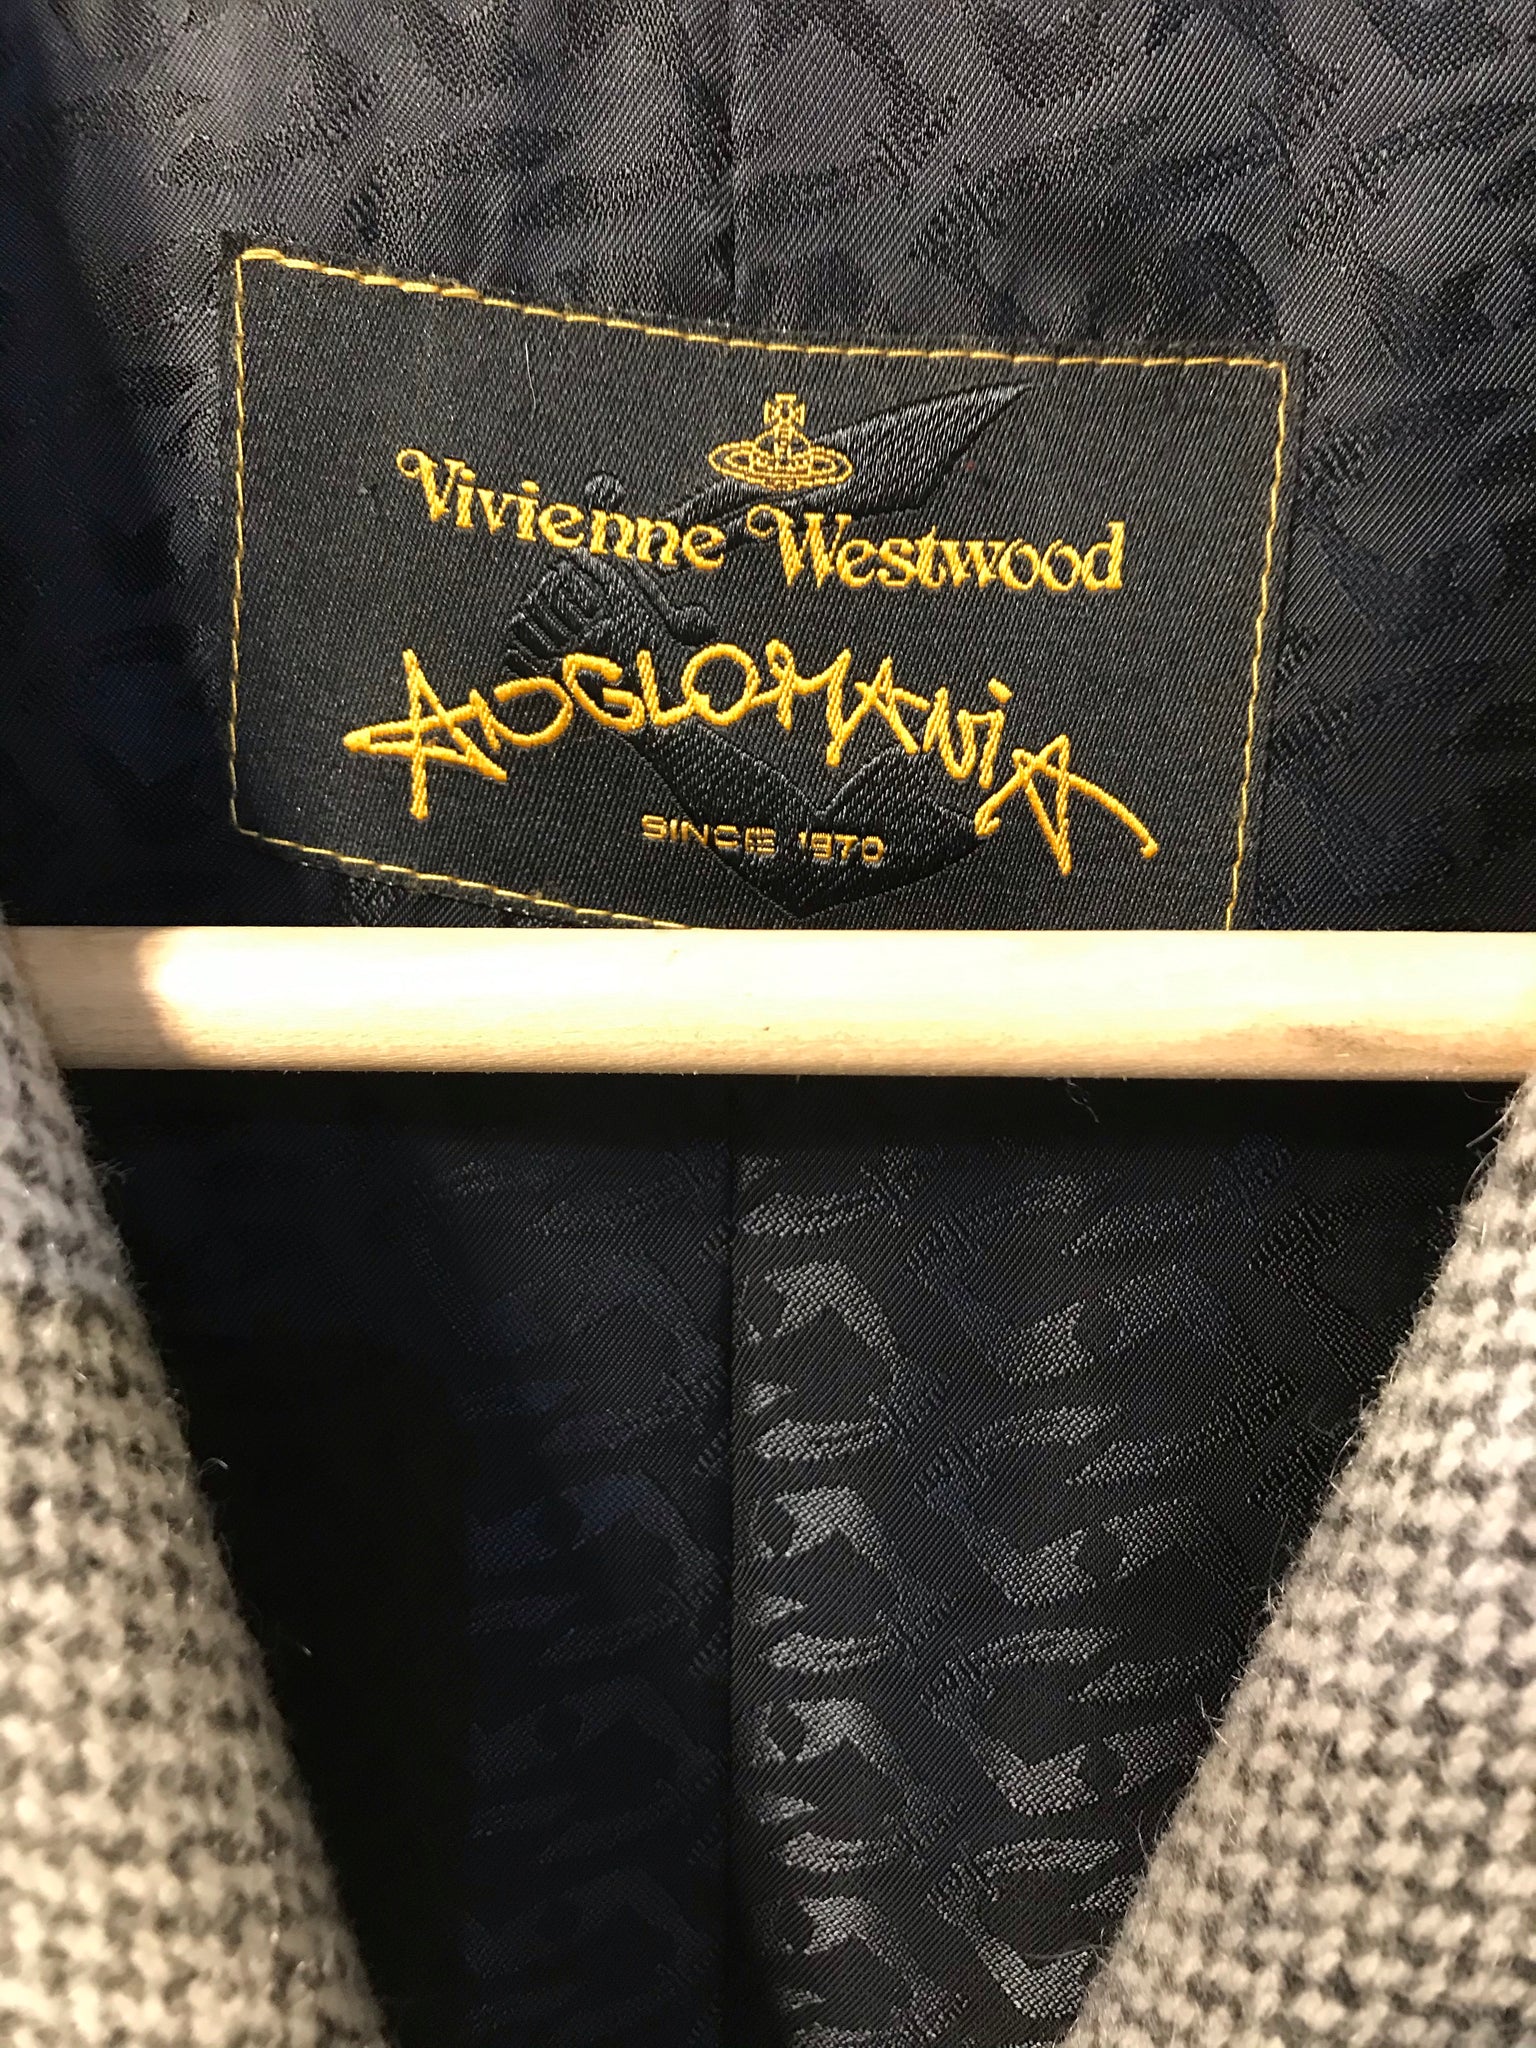 Isabella's Wardrobe Vivienne Westwood Anglomania Lana Wool Coat.